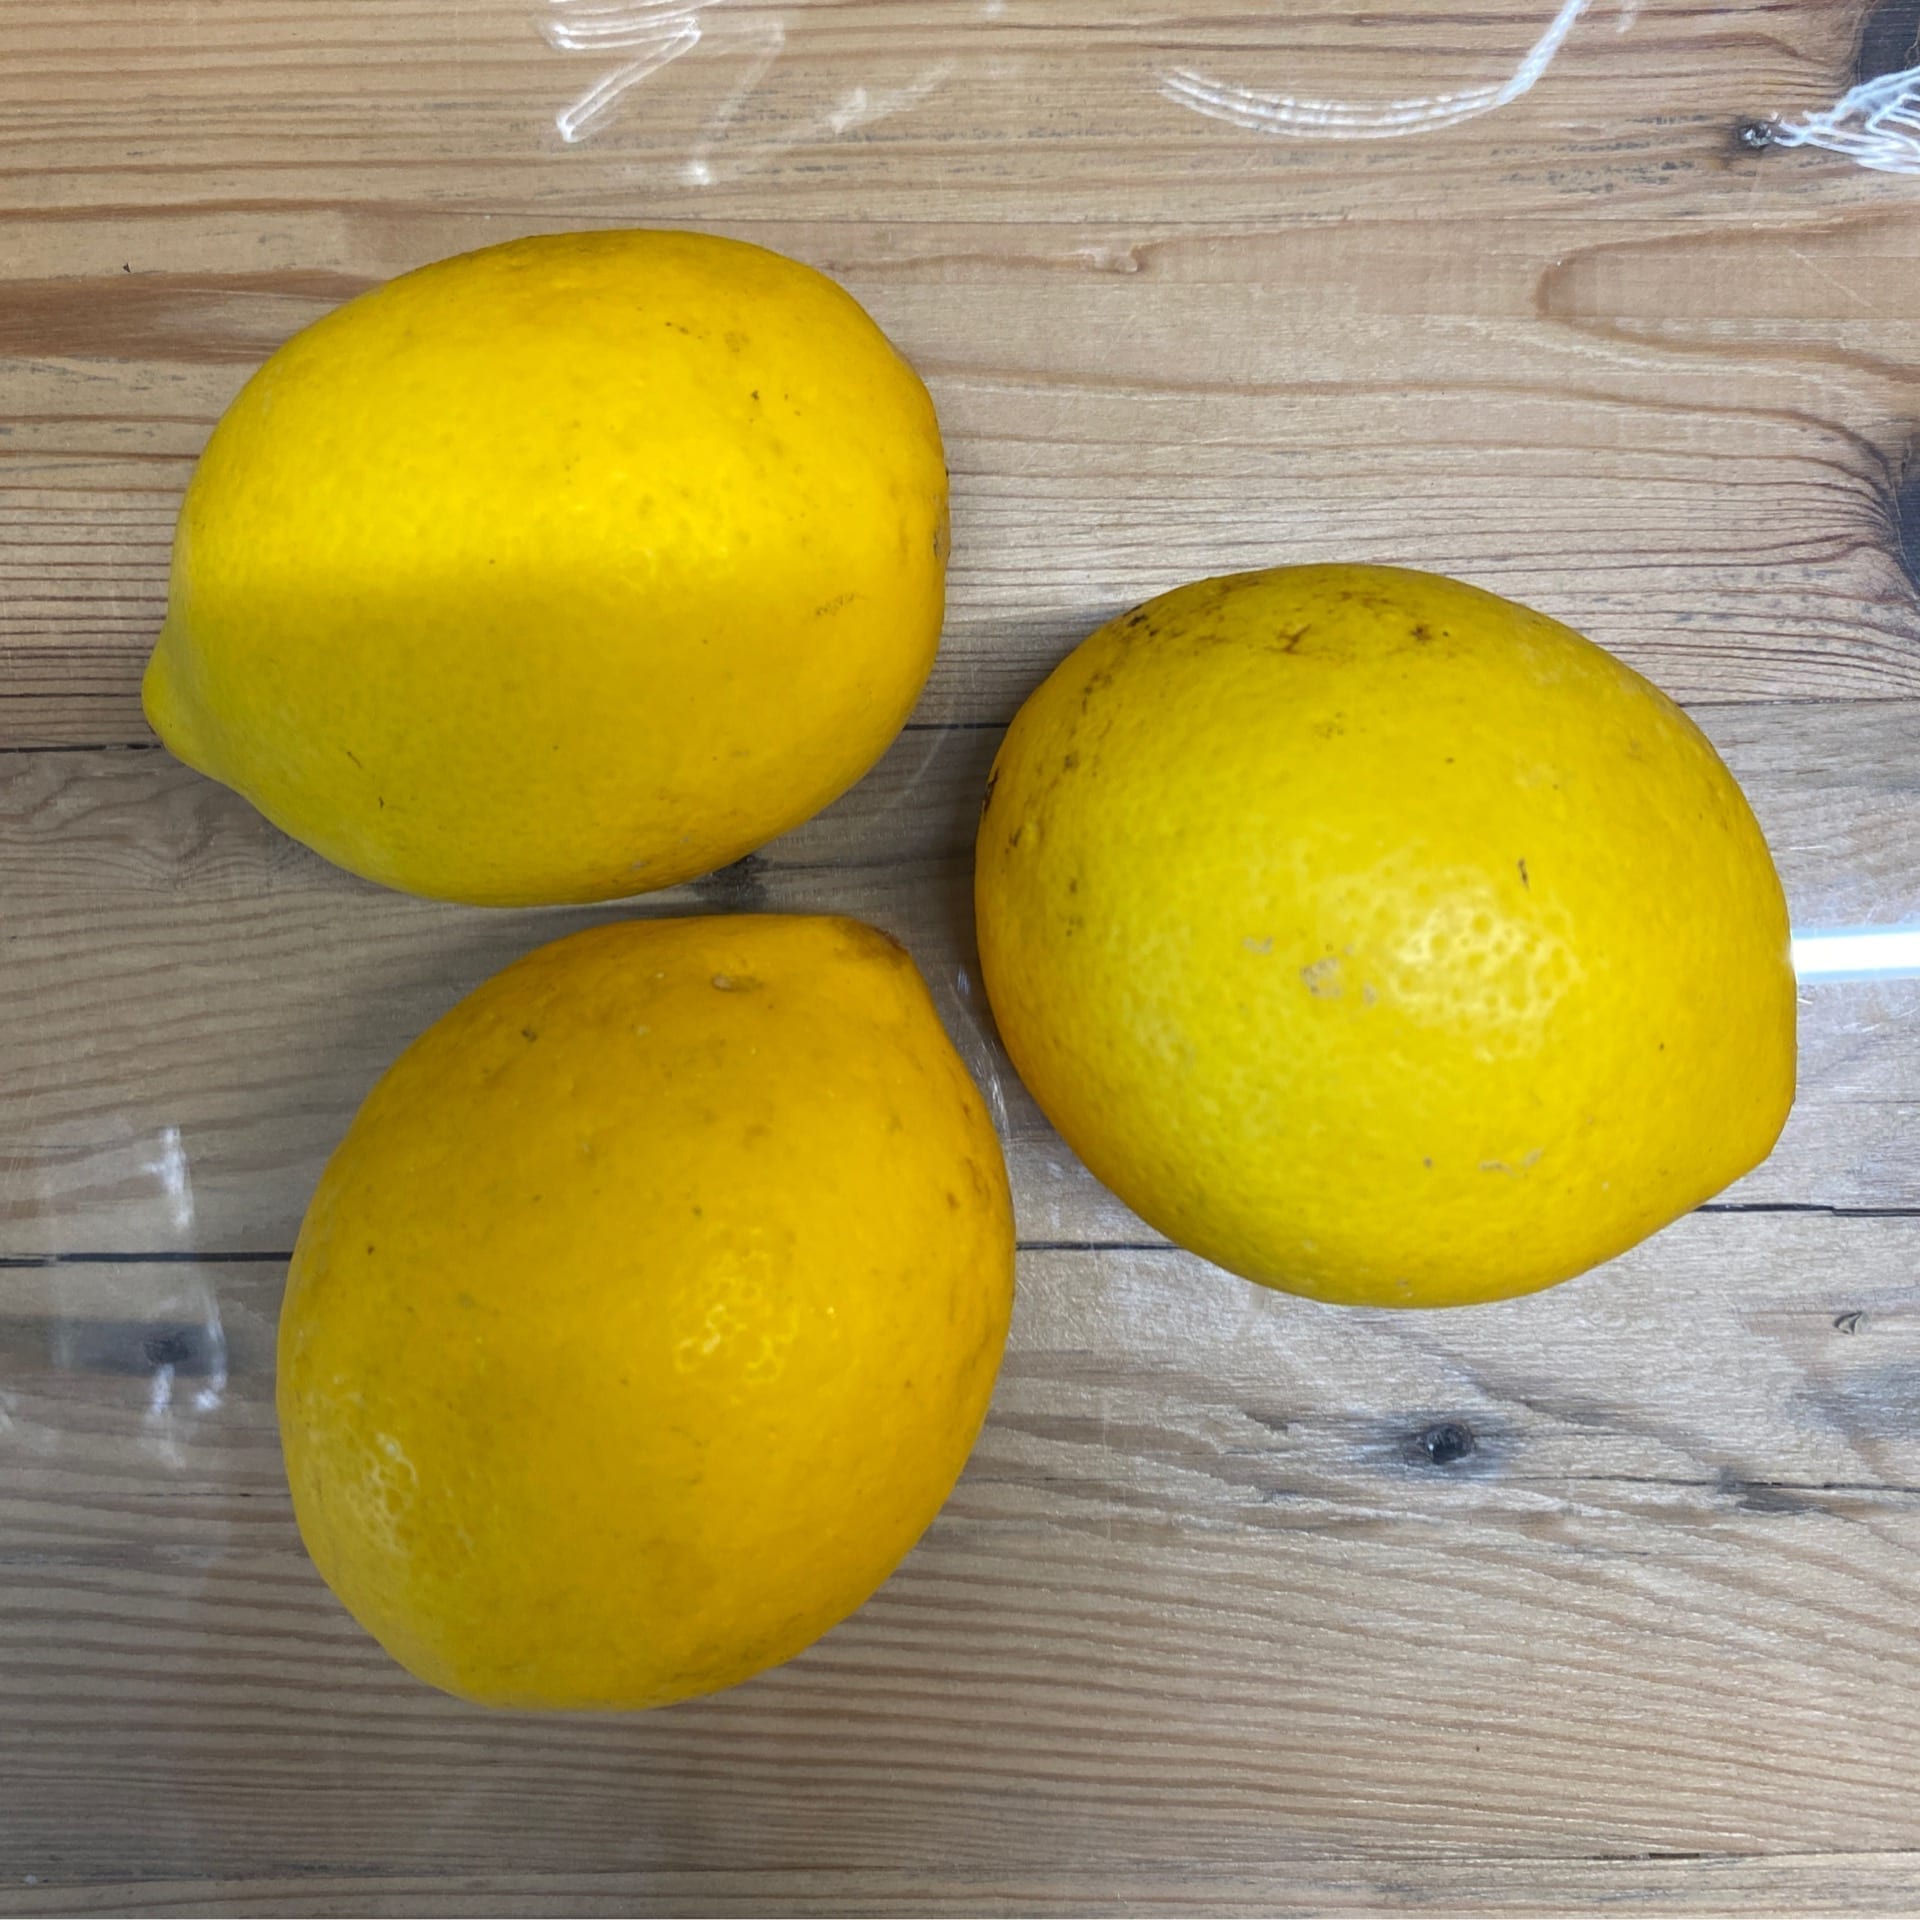 https://ex9gmccx2pn.exactdn.com/wp-content/uploads/2023/02/lemons-usda-organic.jpeg?strip=all&lossy=1&ssl=1&fit=1920%2C1920